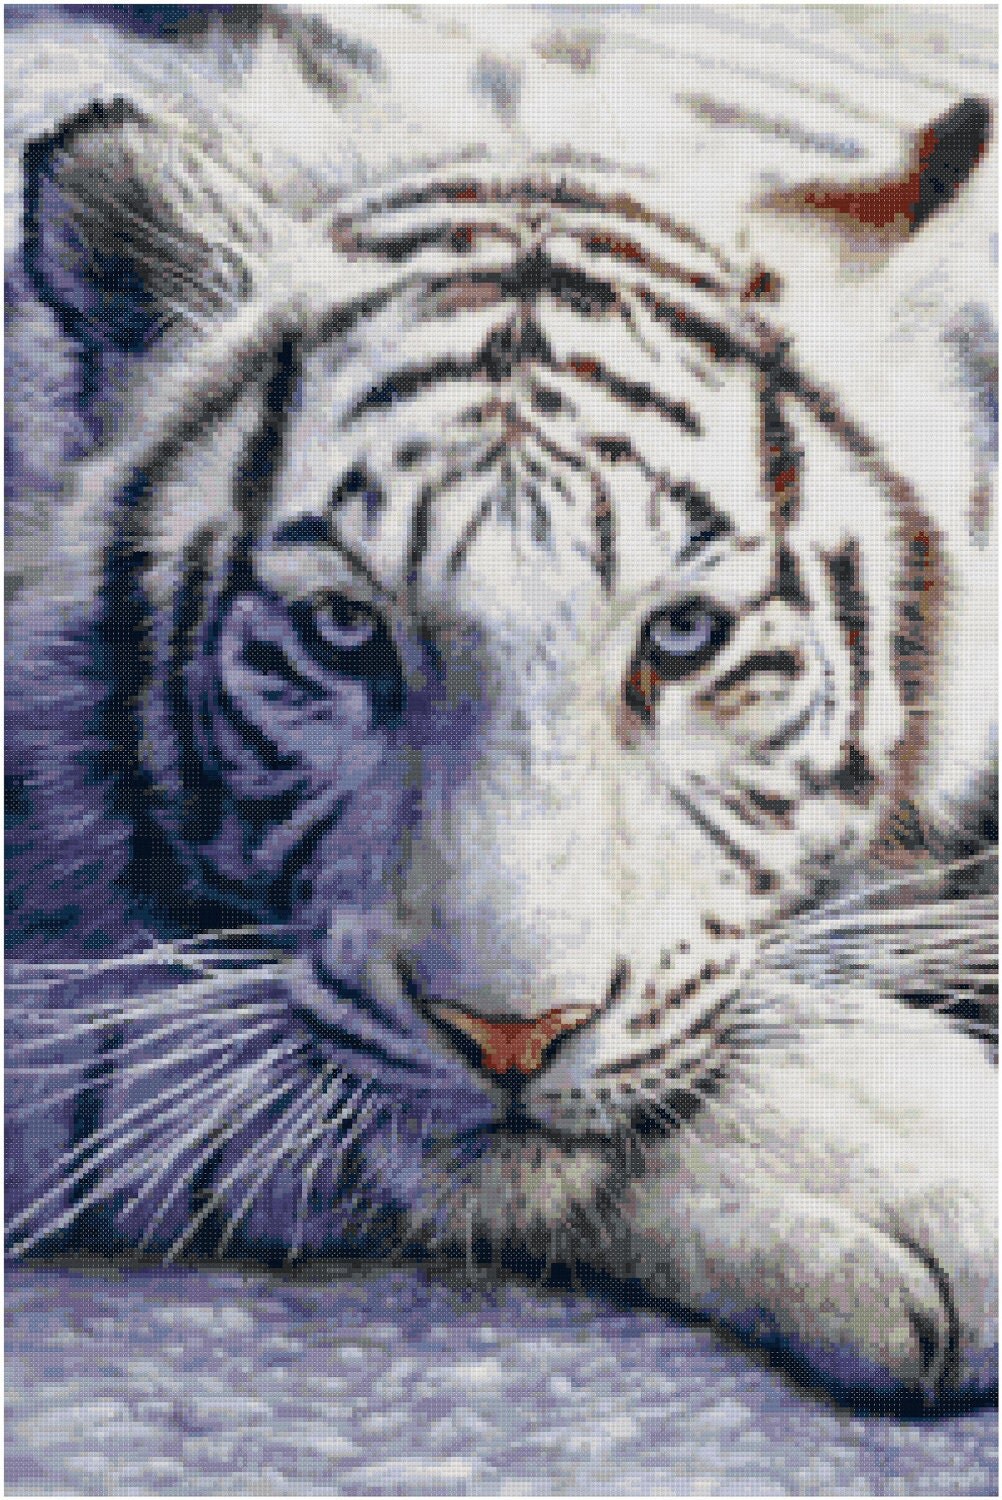 Tiger Cross Stitch Patterns